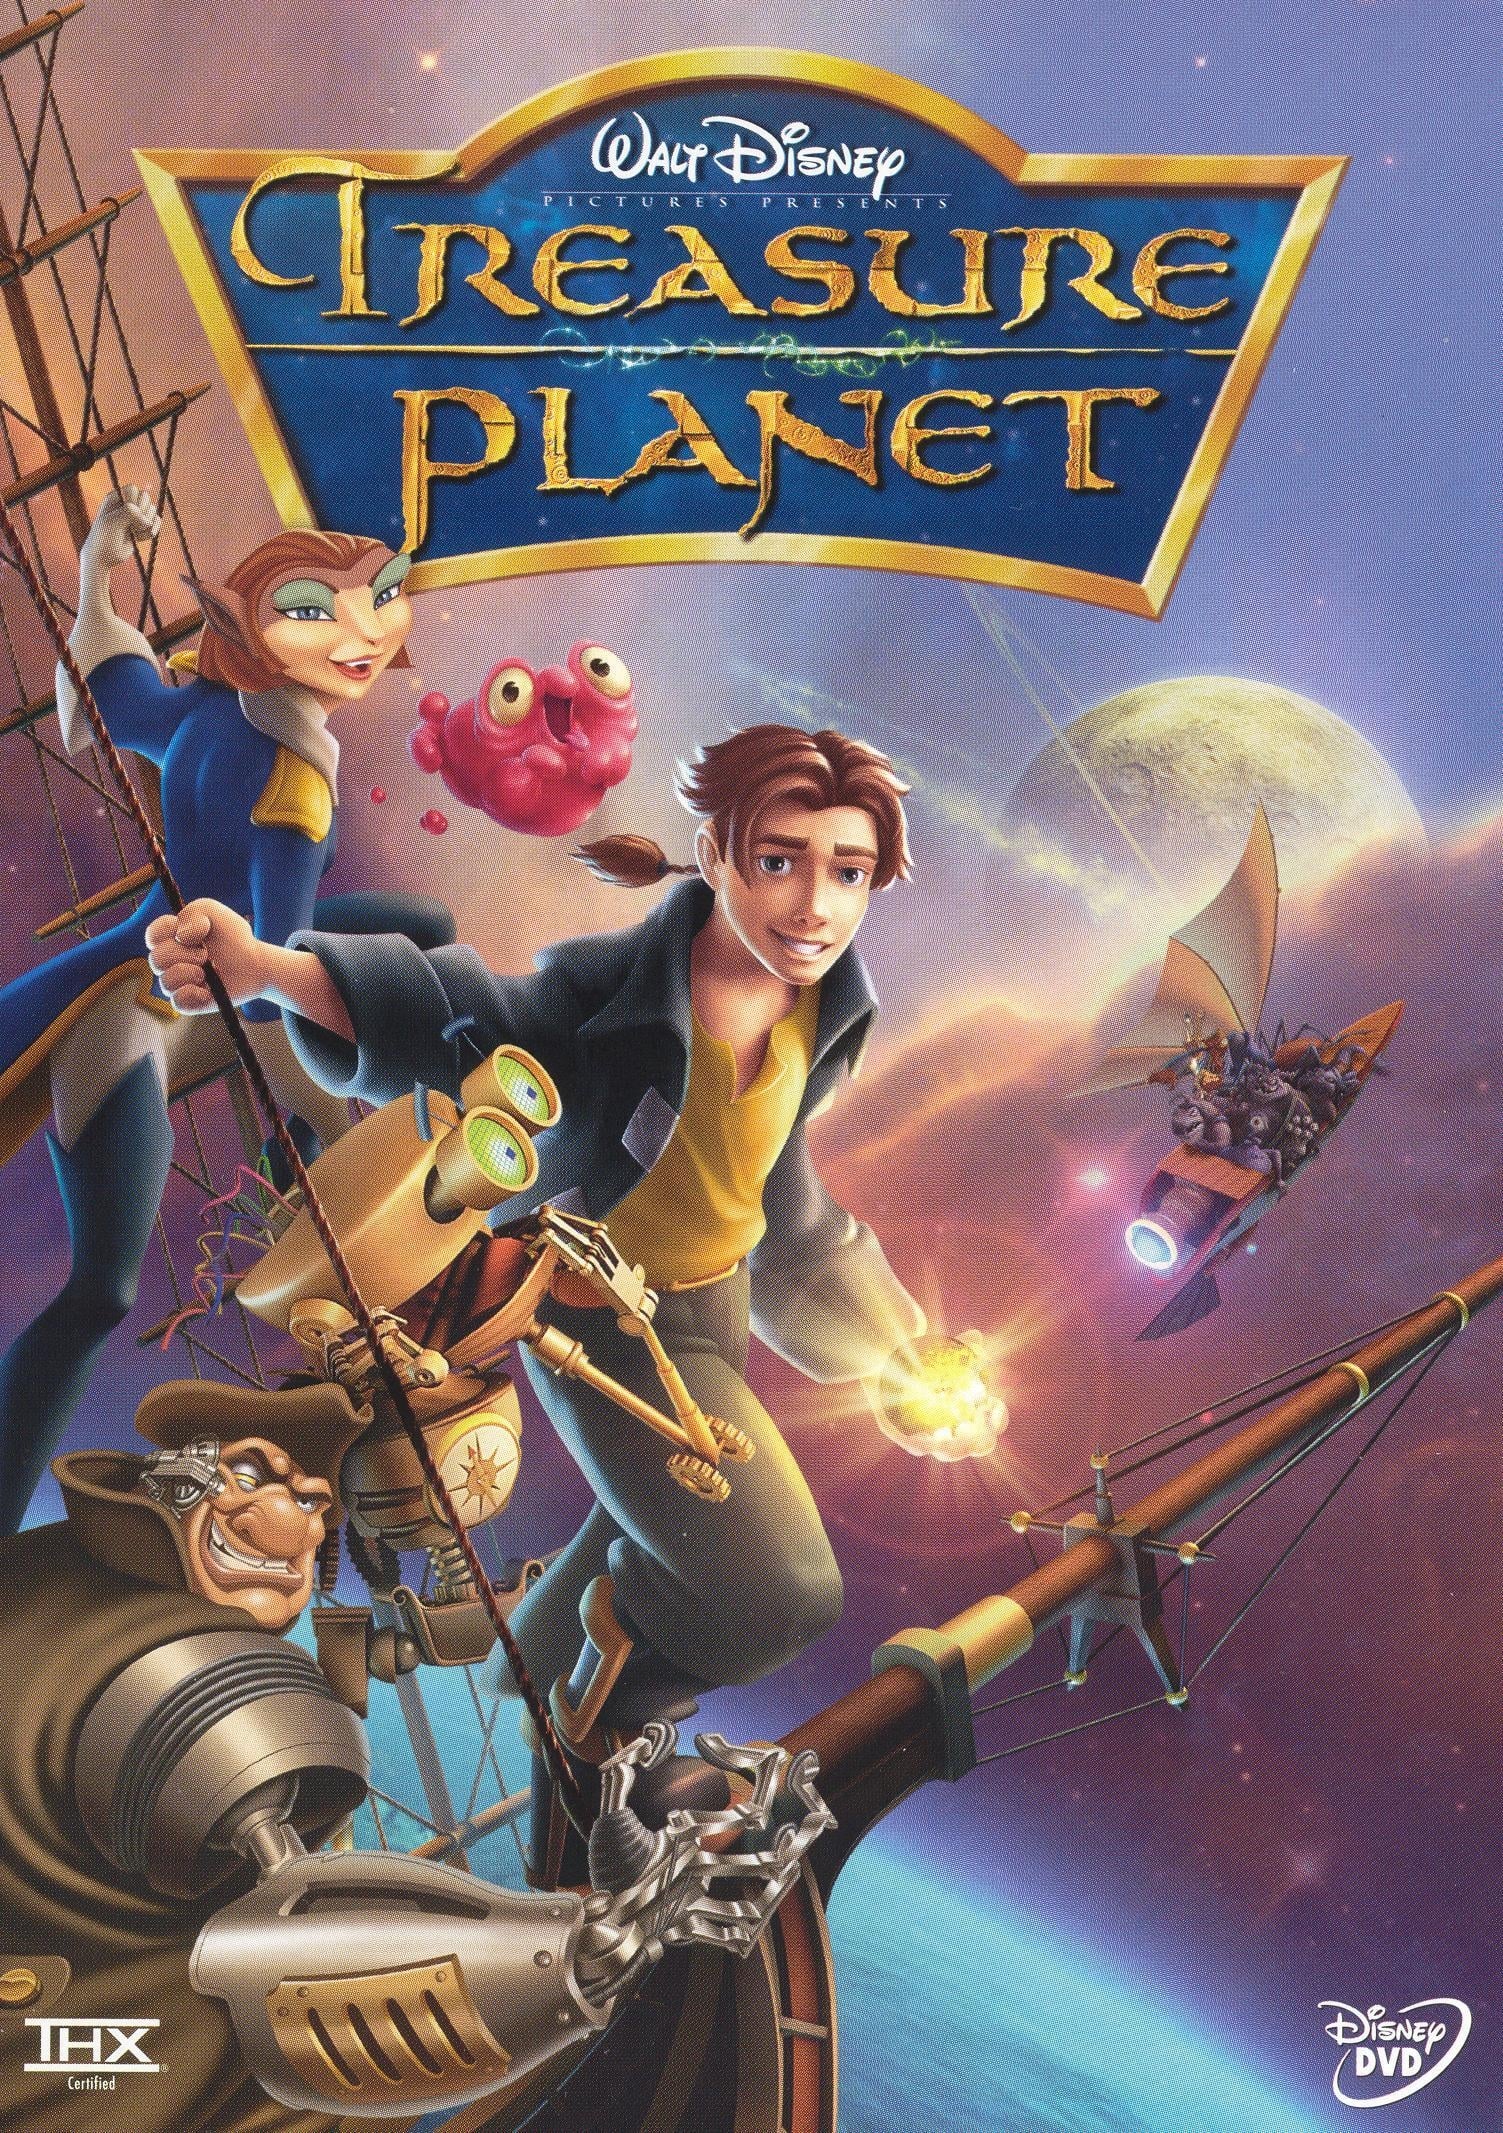 Disney's Animation Magic: Treasure Planet